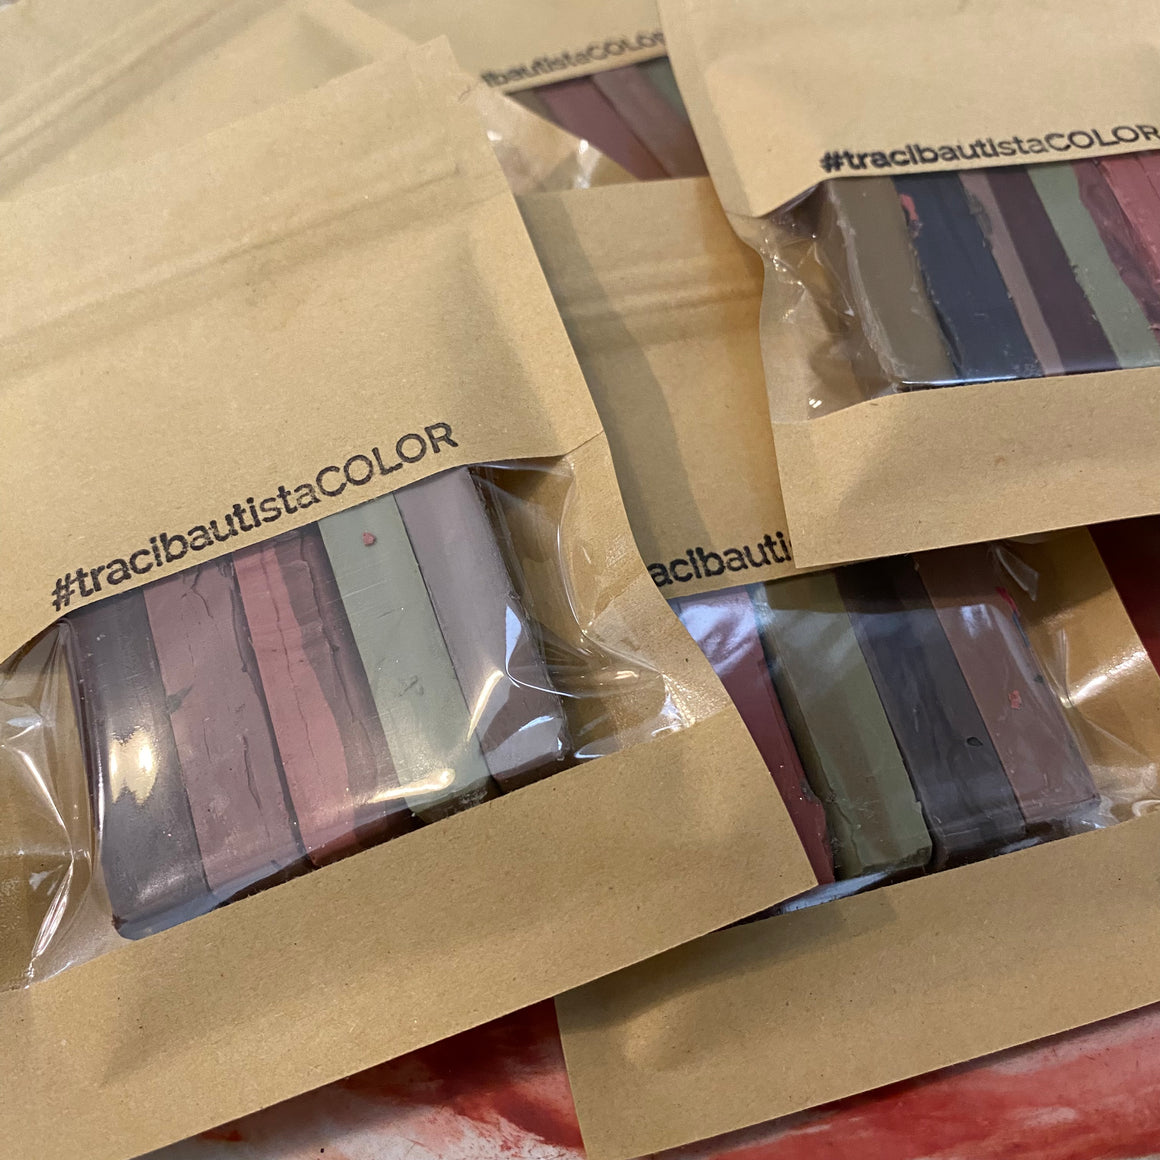 #tracibautistaCOLOR BOHO COASTAL VIBES WATERMEDIA collection wax pastels {5-set}